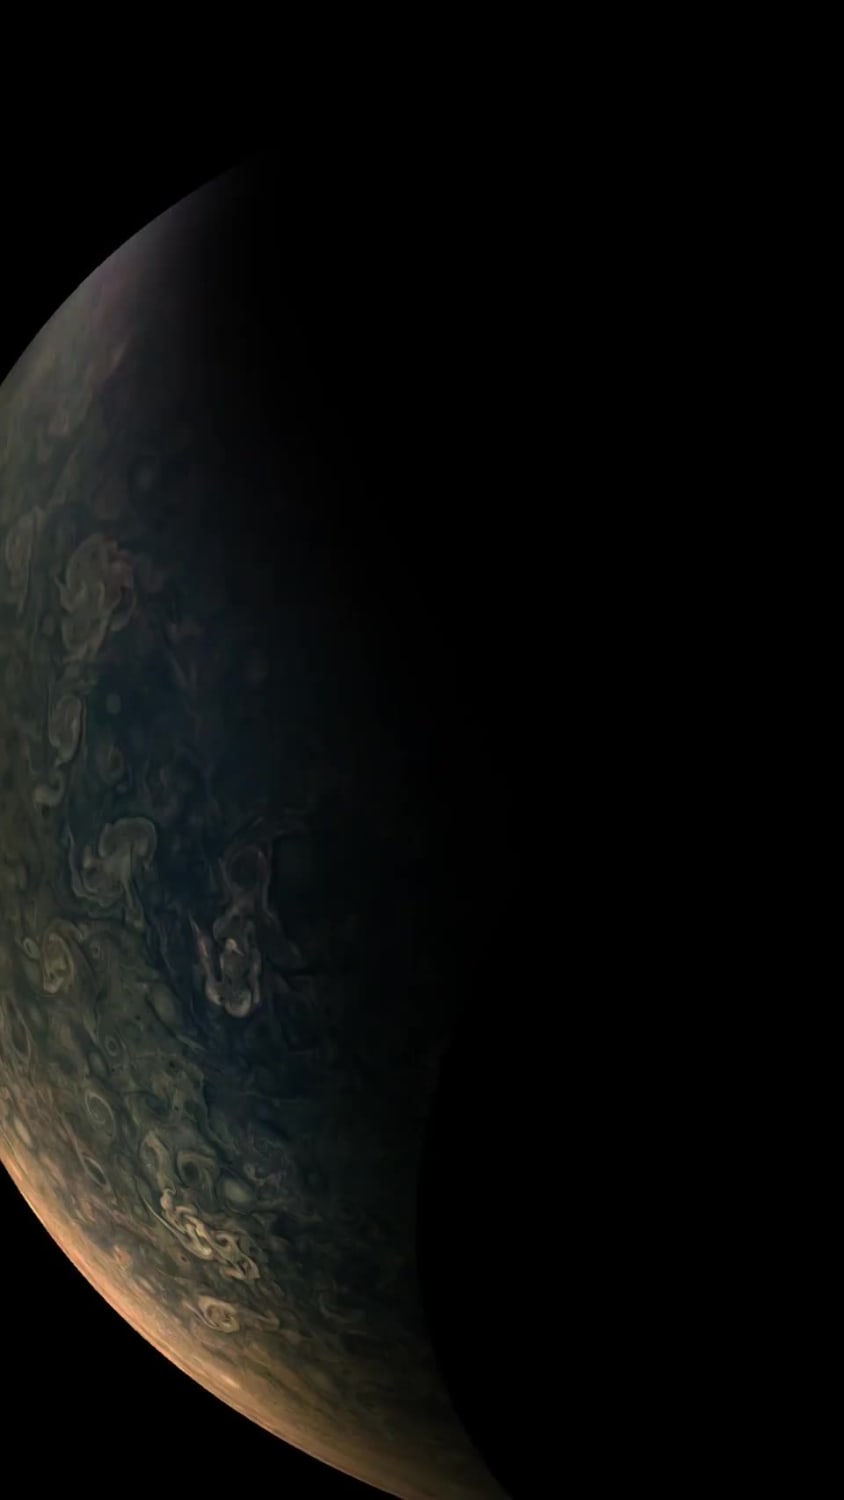 Jupiter flyby footage from NASA's Juno probe